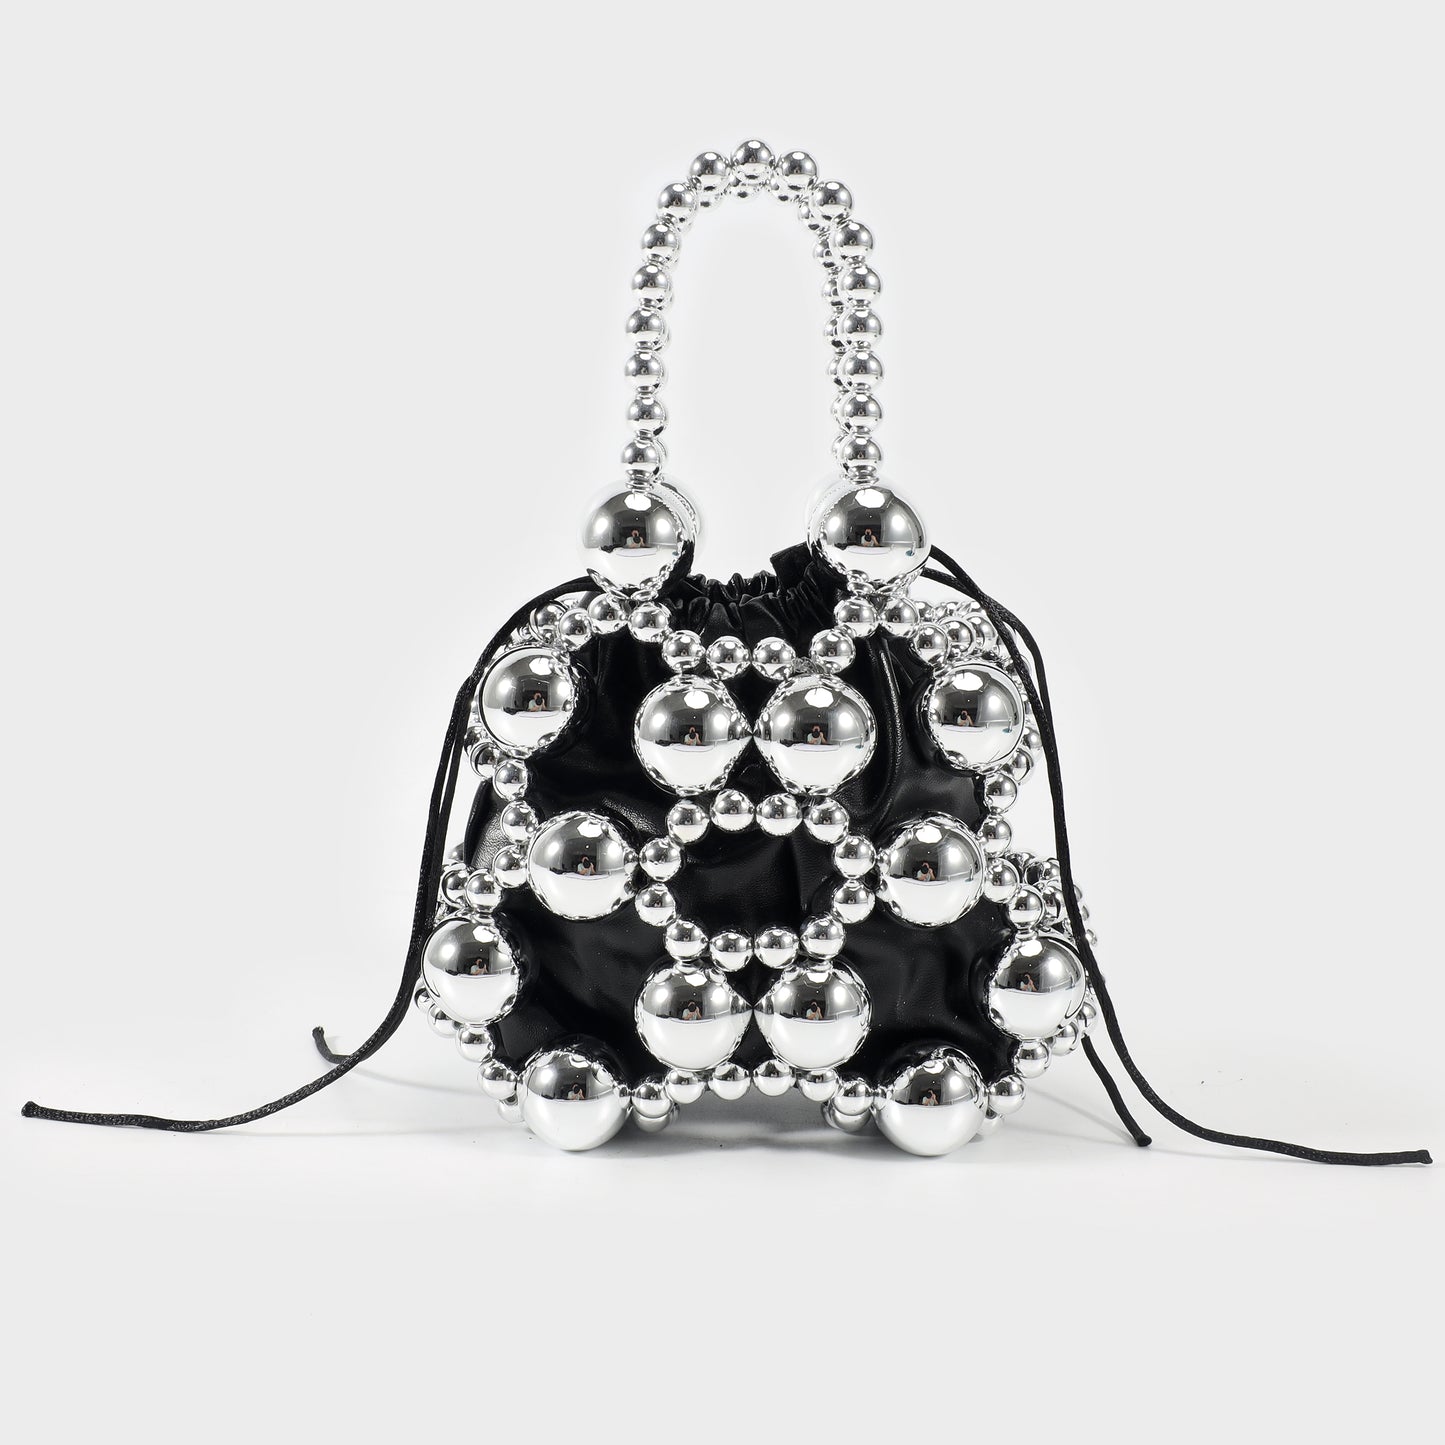 Handbag with beads and internal fabric - SILVER